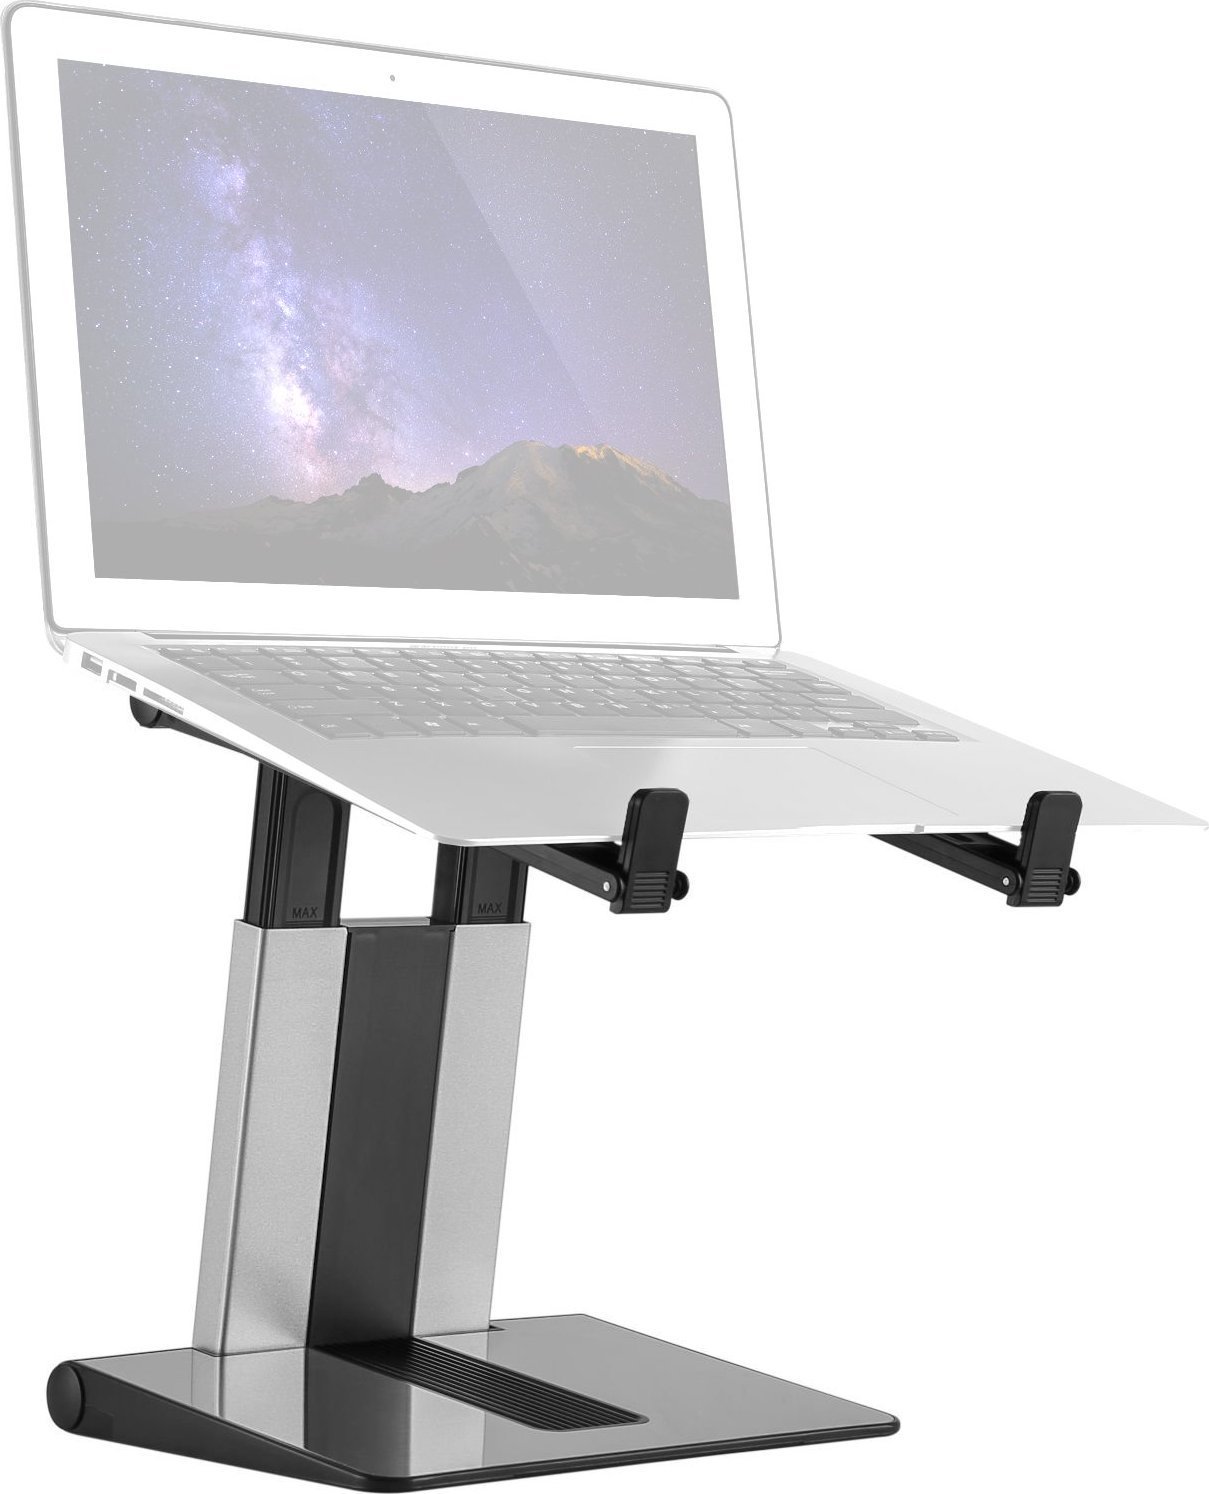 Podstawka pod laptopa Mozos MOZOS LS4-ALU podstawka pod laptopa aluminiowa srebrna